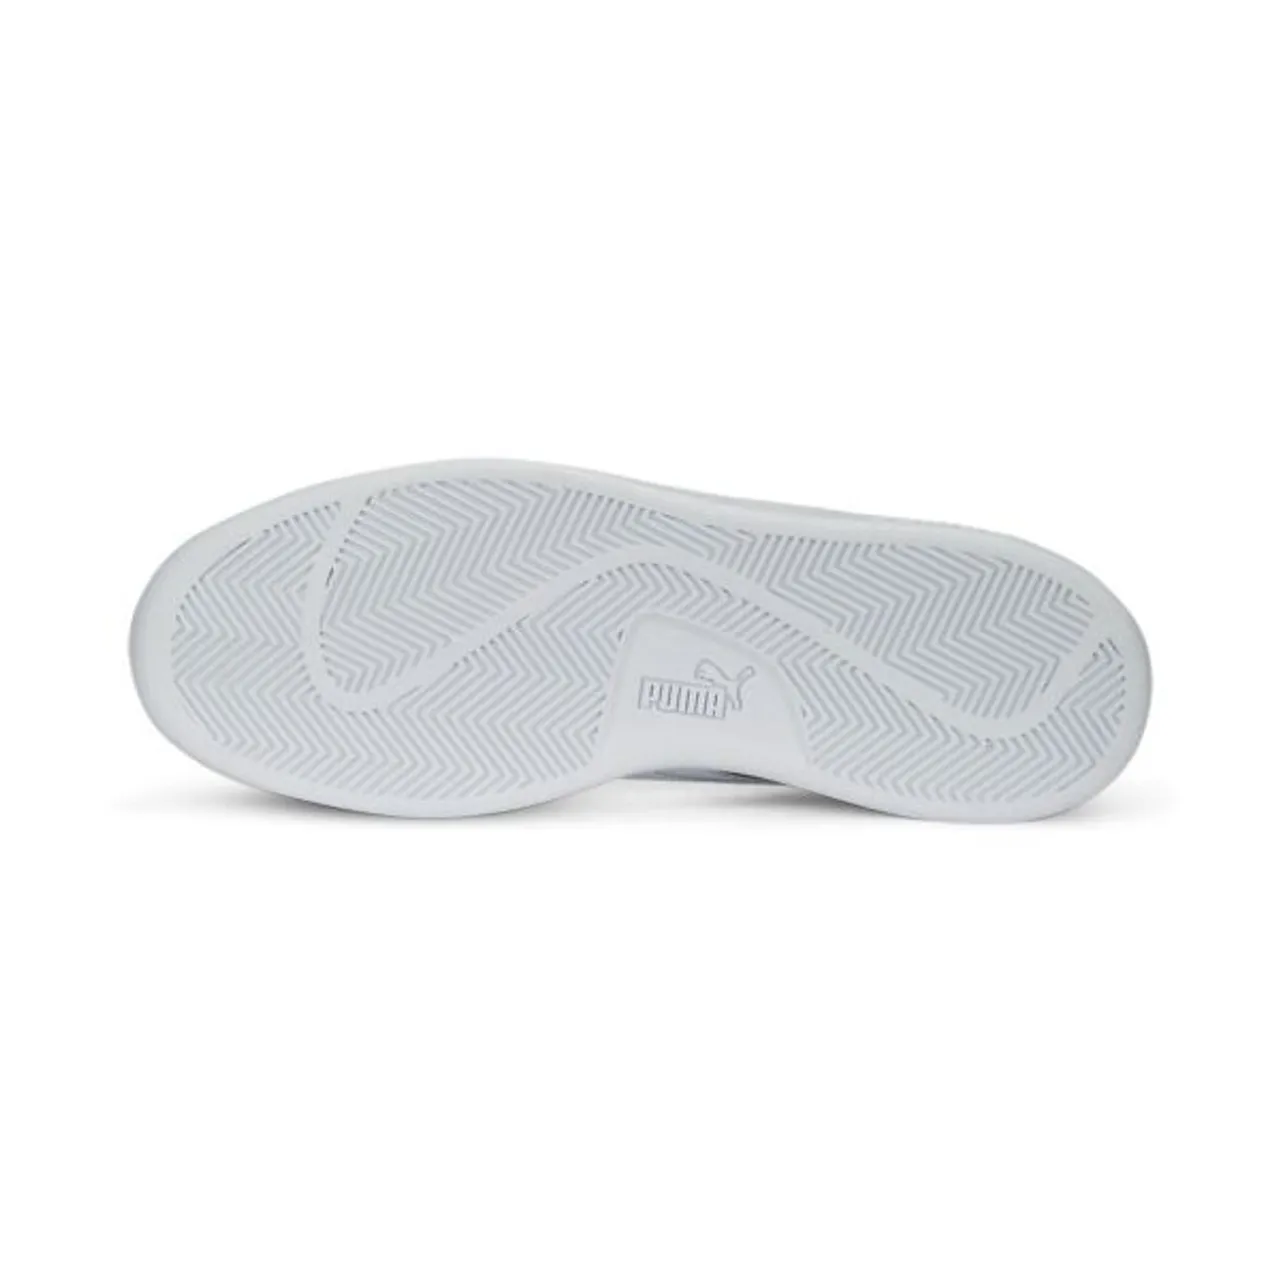 Sneaker PUMA "Smash 3.0 L Sneakers Erwachsene" Gr. 40.5, schwarz-weiß (black white) Schuhe Puma